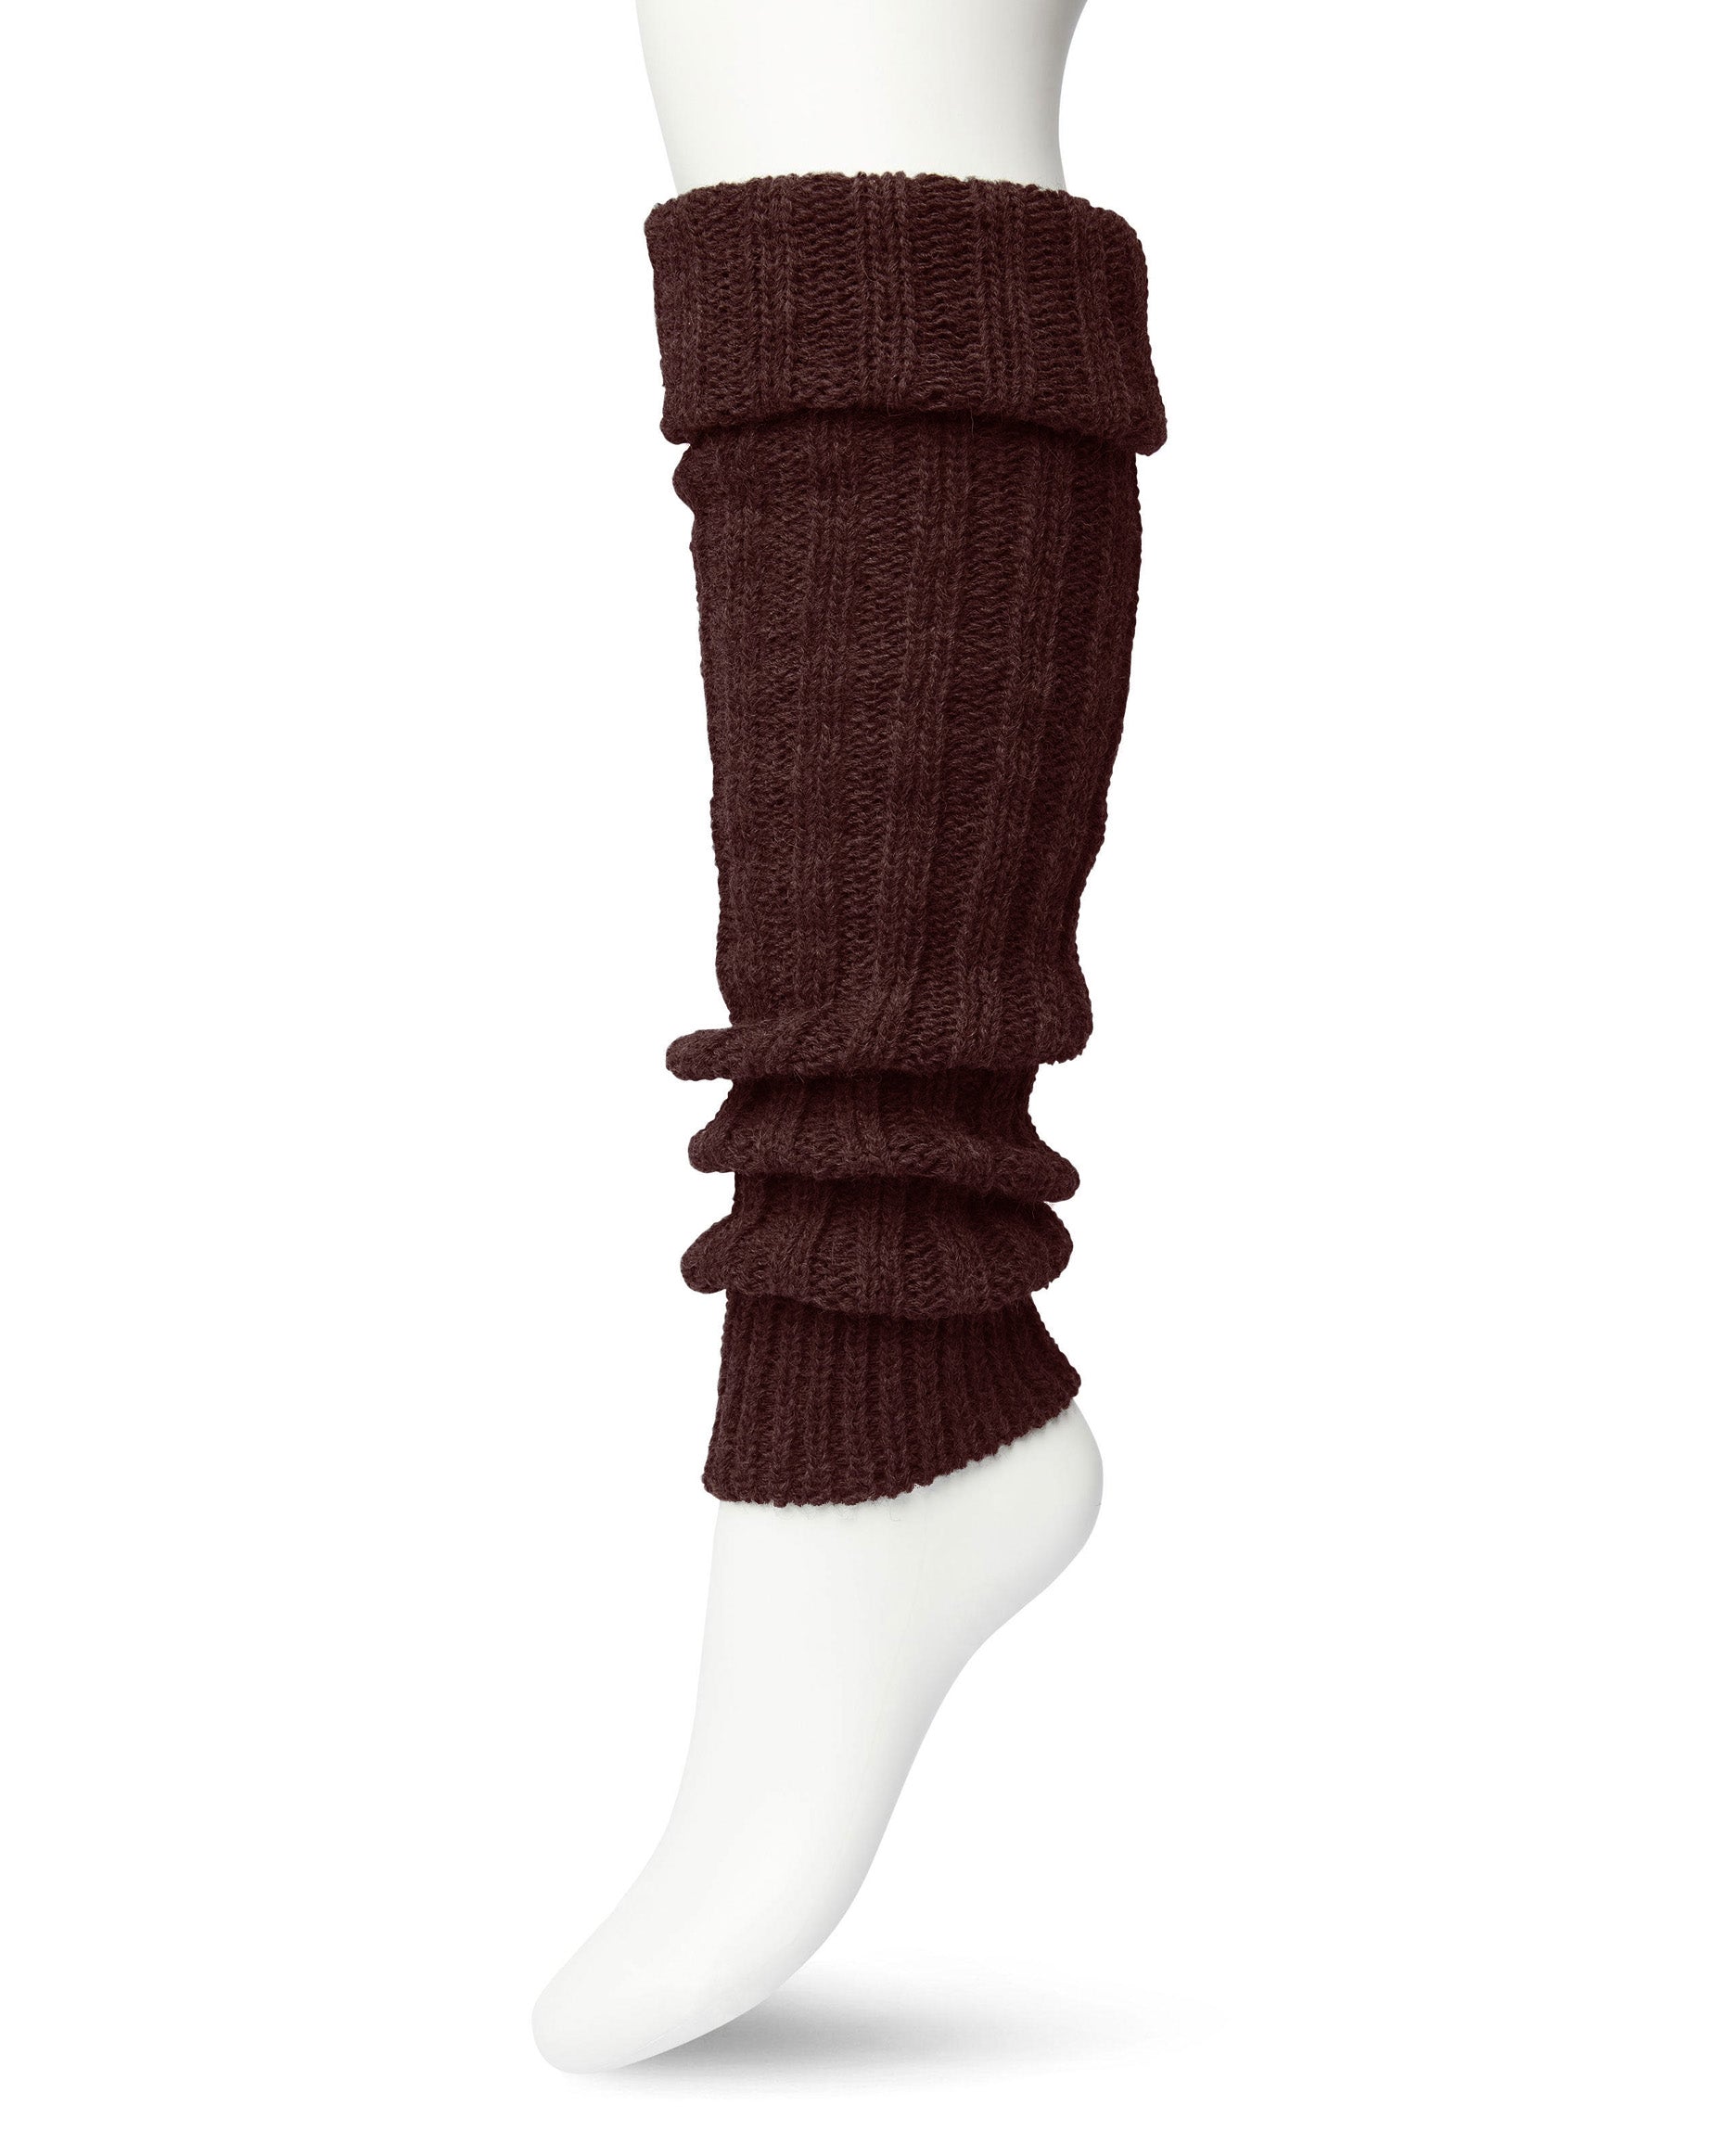 Bonnie Doon Sleever/Legwarmer BE021766 - dark brown wool mix chunky knitted leg warmers